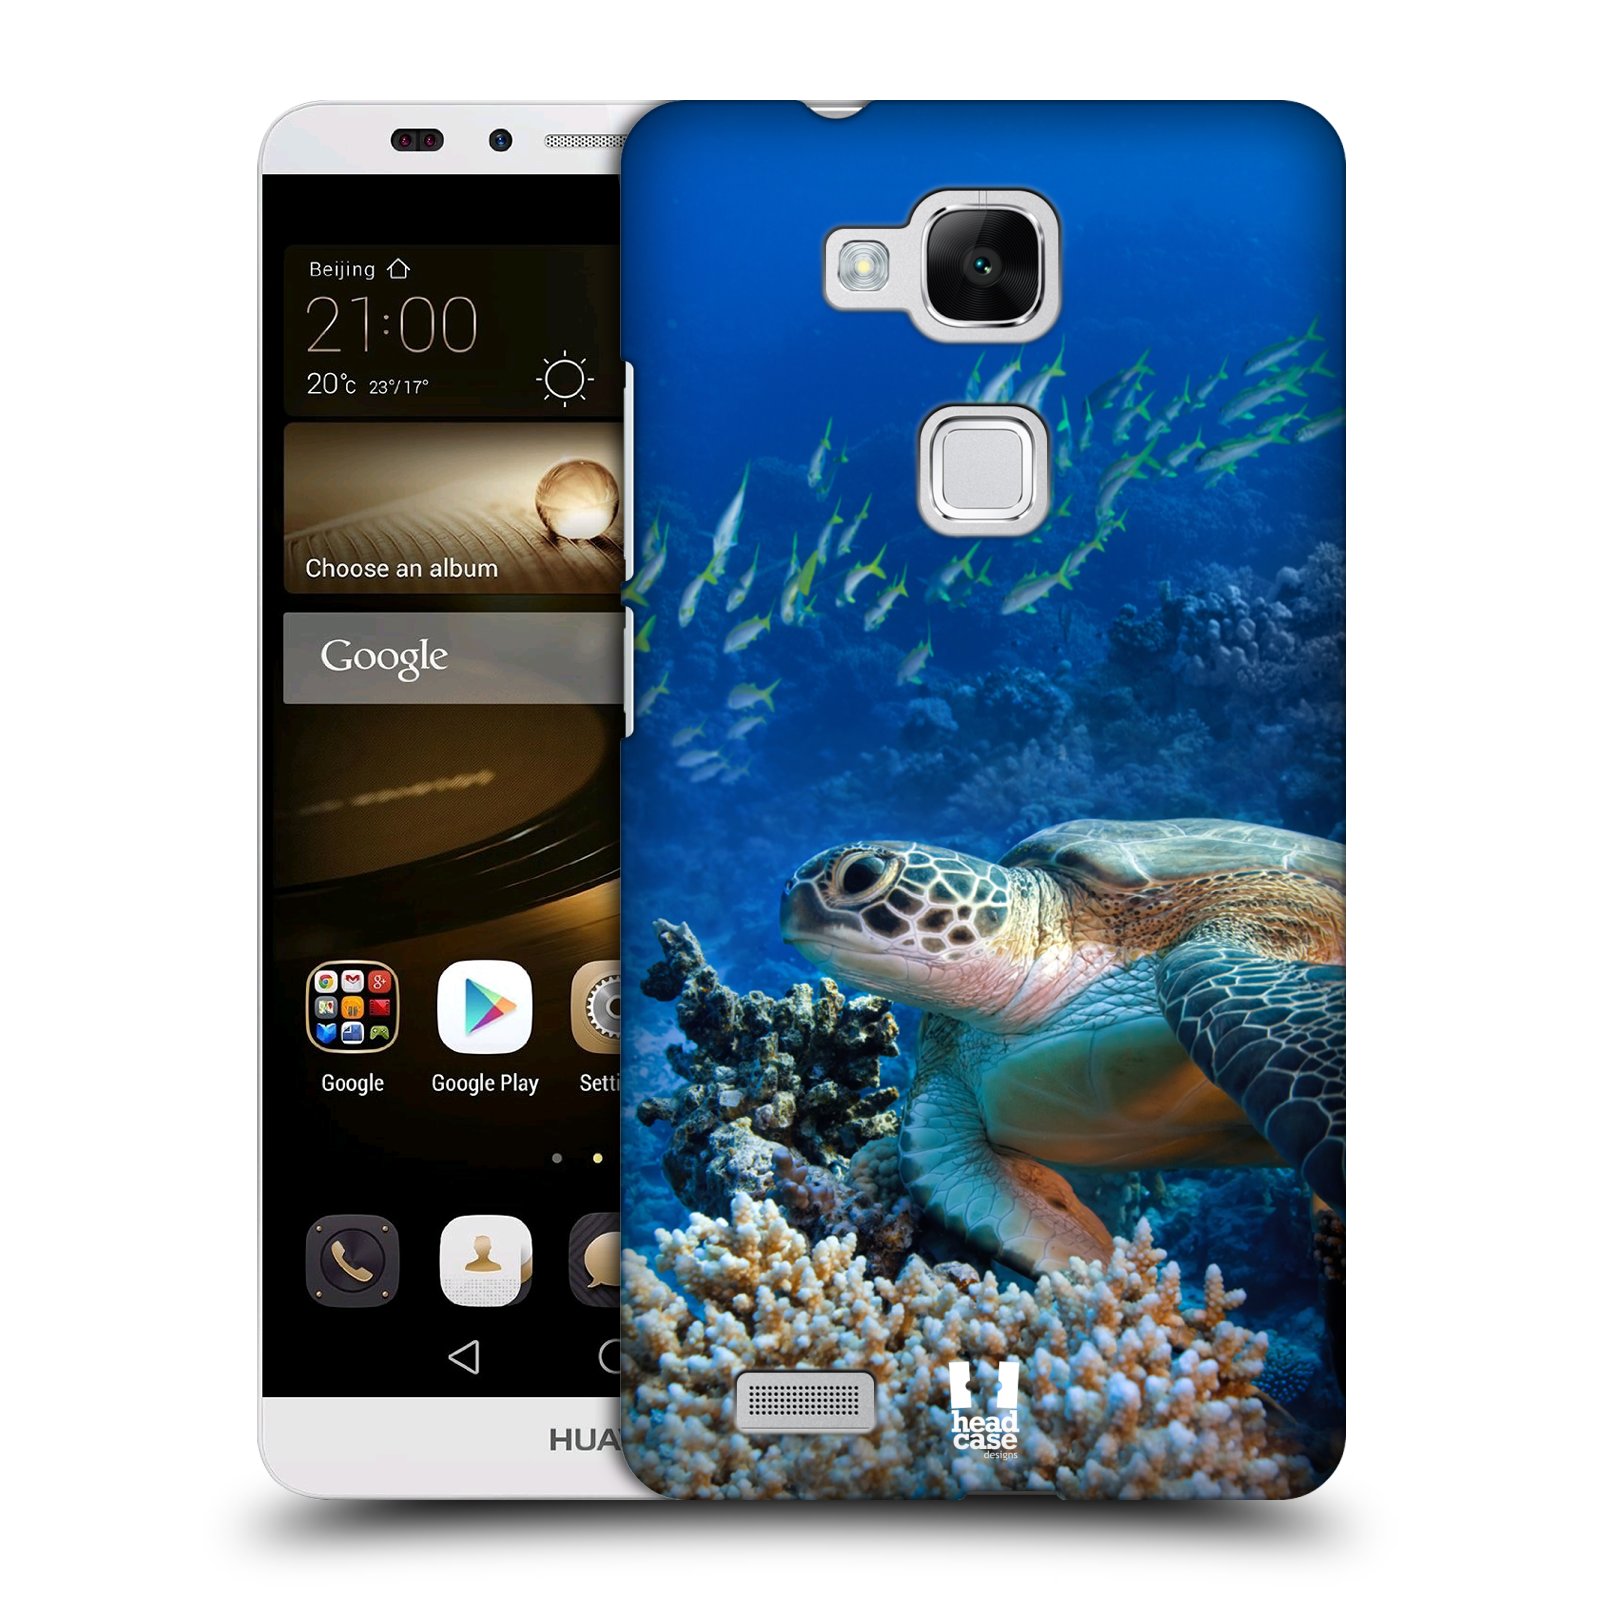 HEAD CASE plastový obal na mobil Huawei Mate 7 vzor Divočina, Divoký život a zvířata foto MOŘSKÁ ŽELVA MODRÁ PODMOŘSKÁ HLADINA